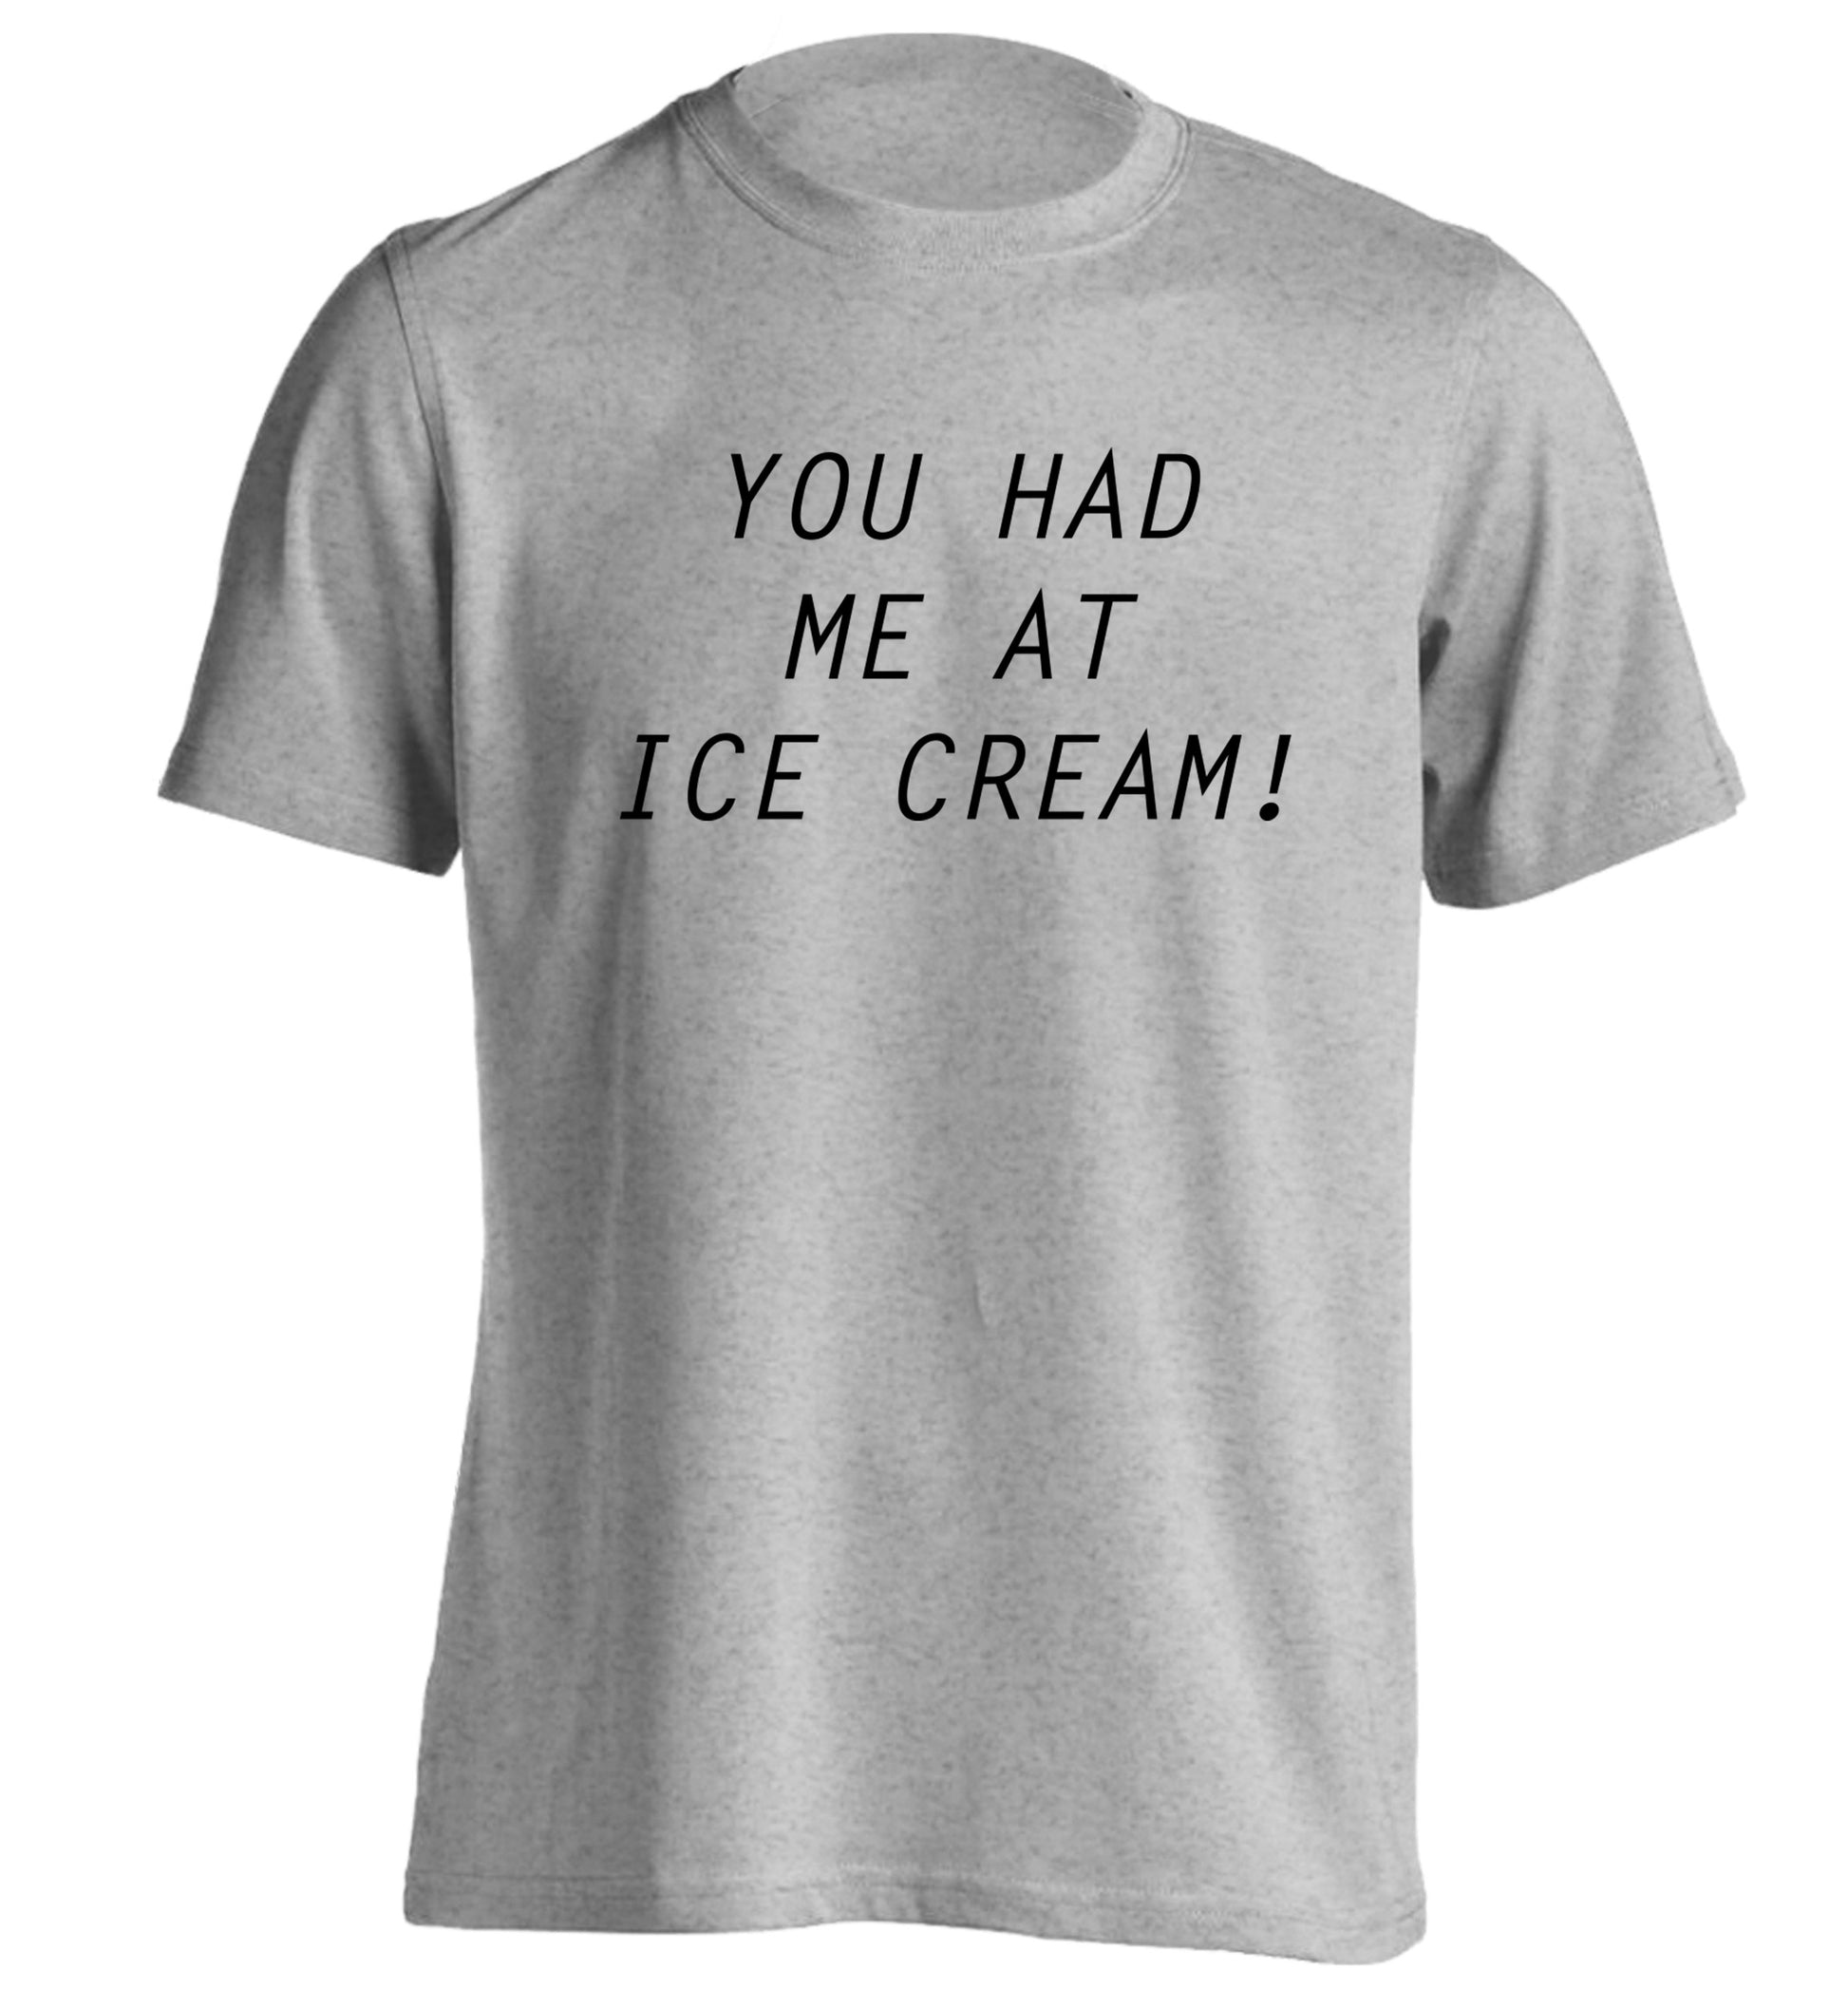 You had me at ice cream adults unisex grey Tshirt 2XL